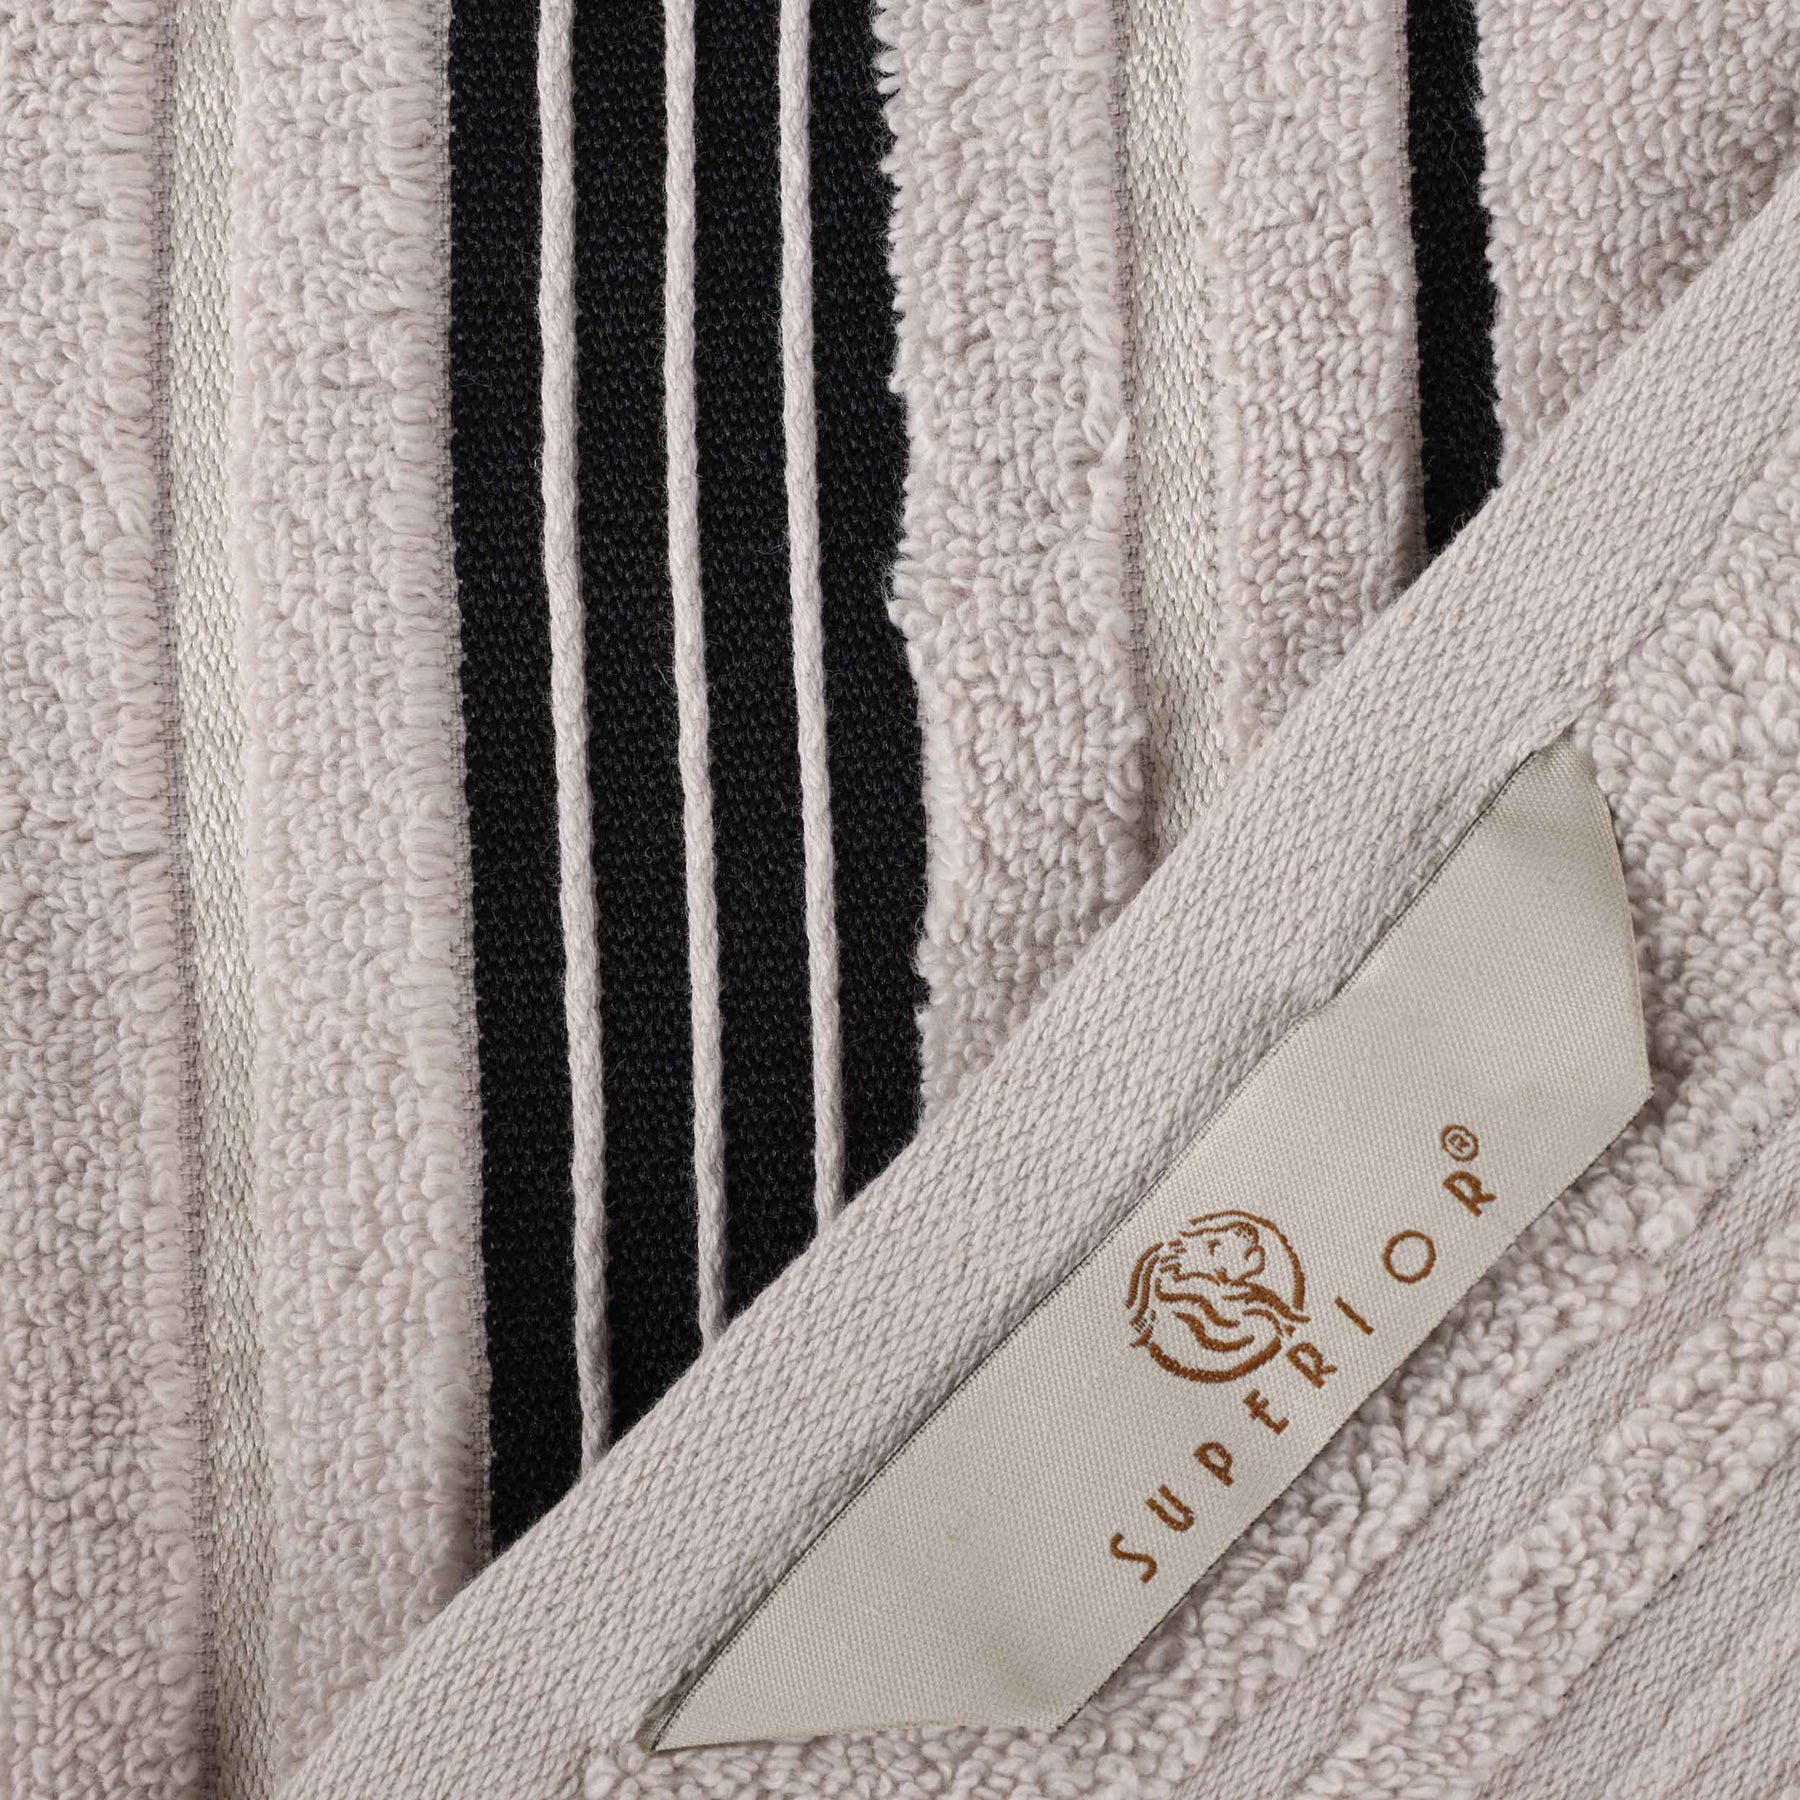 Sadie Zero Twist Cotton Floral Solid and Jacquard Bath Towel - Platinum